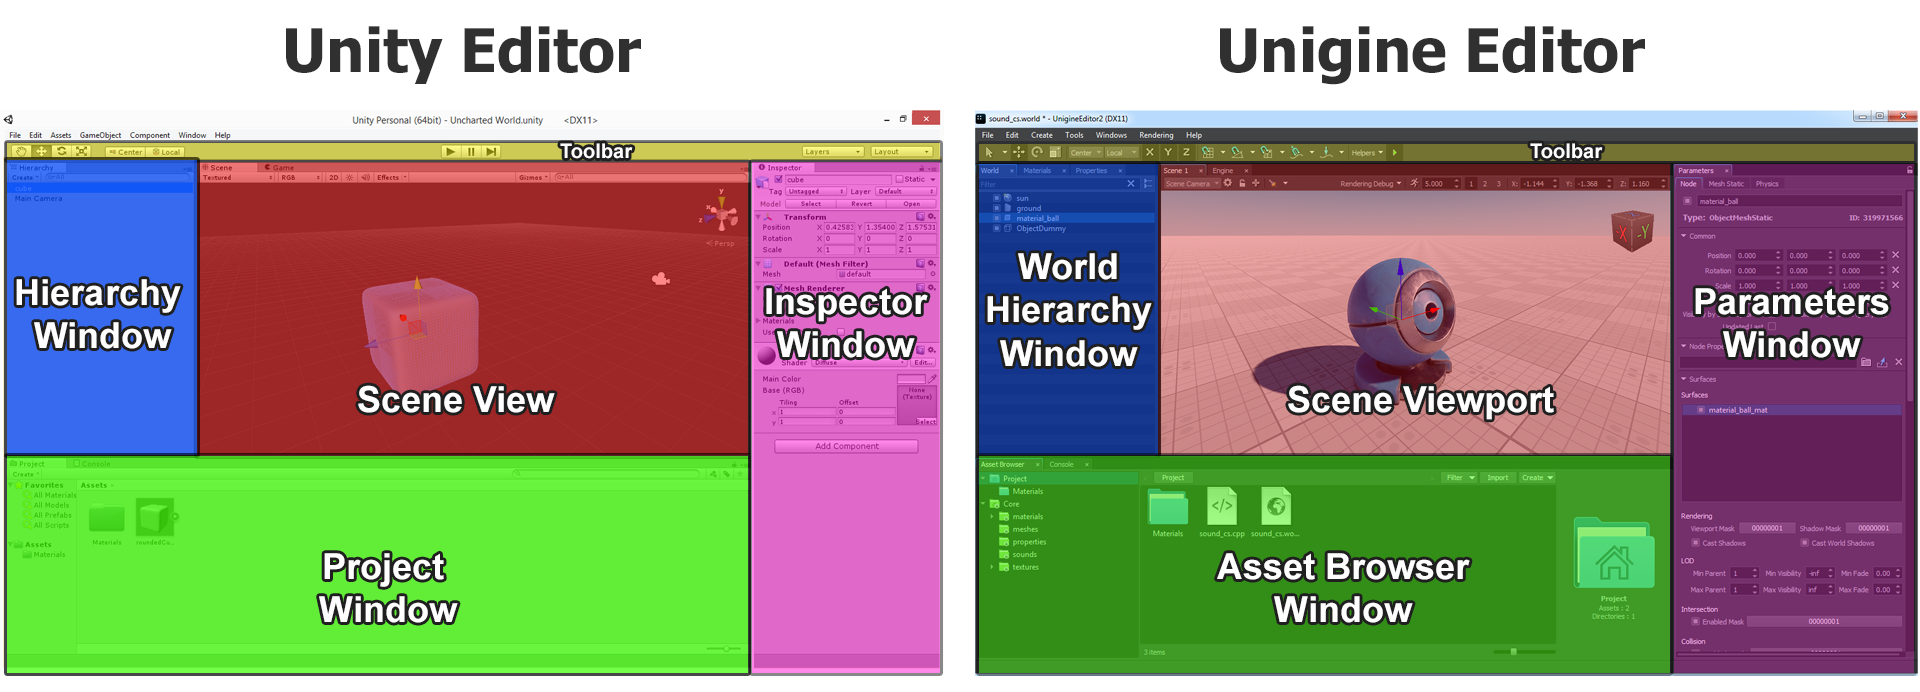 Unity and Unigine Editor UI Comparison (click to enlarge)